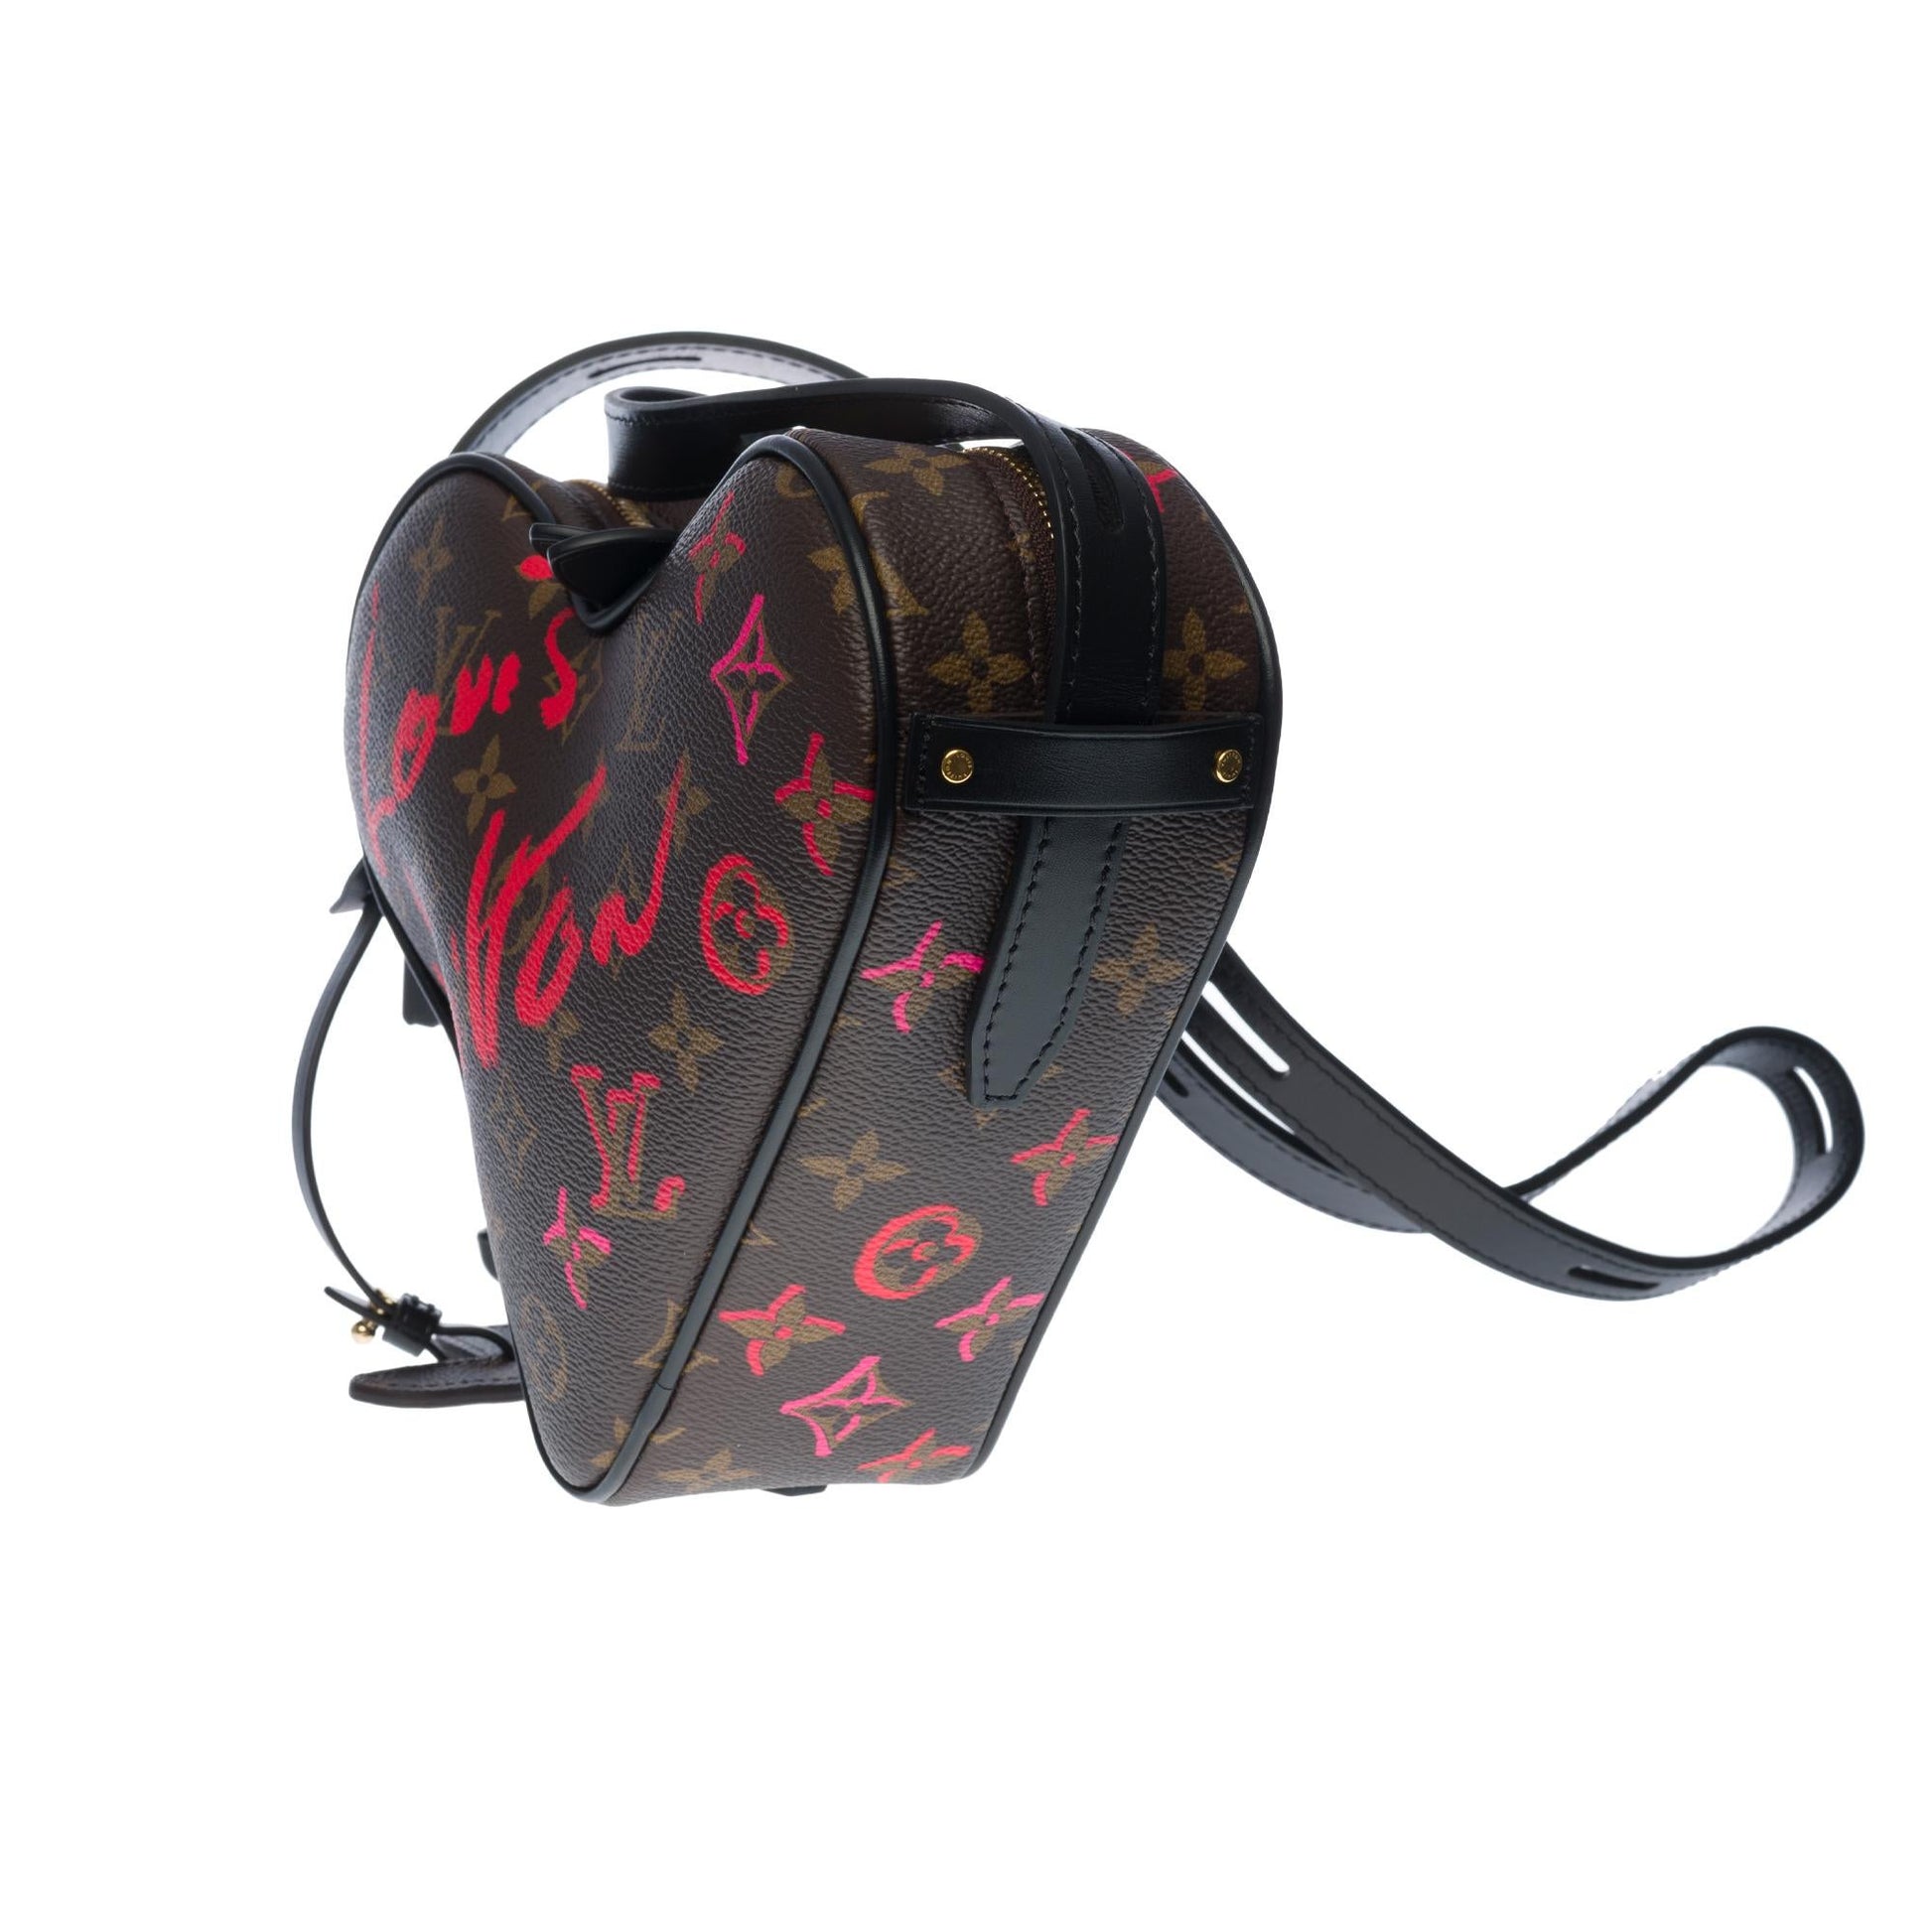 Louis Vuitton 'Fall in Love' Heart Crossbody Bag